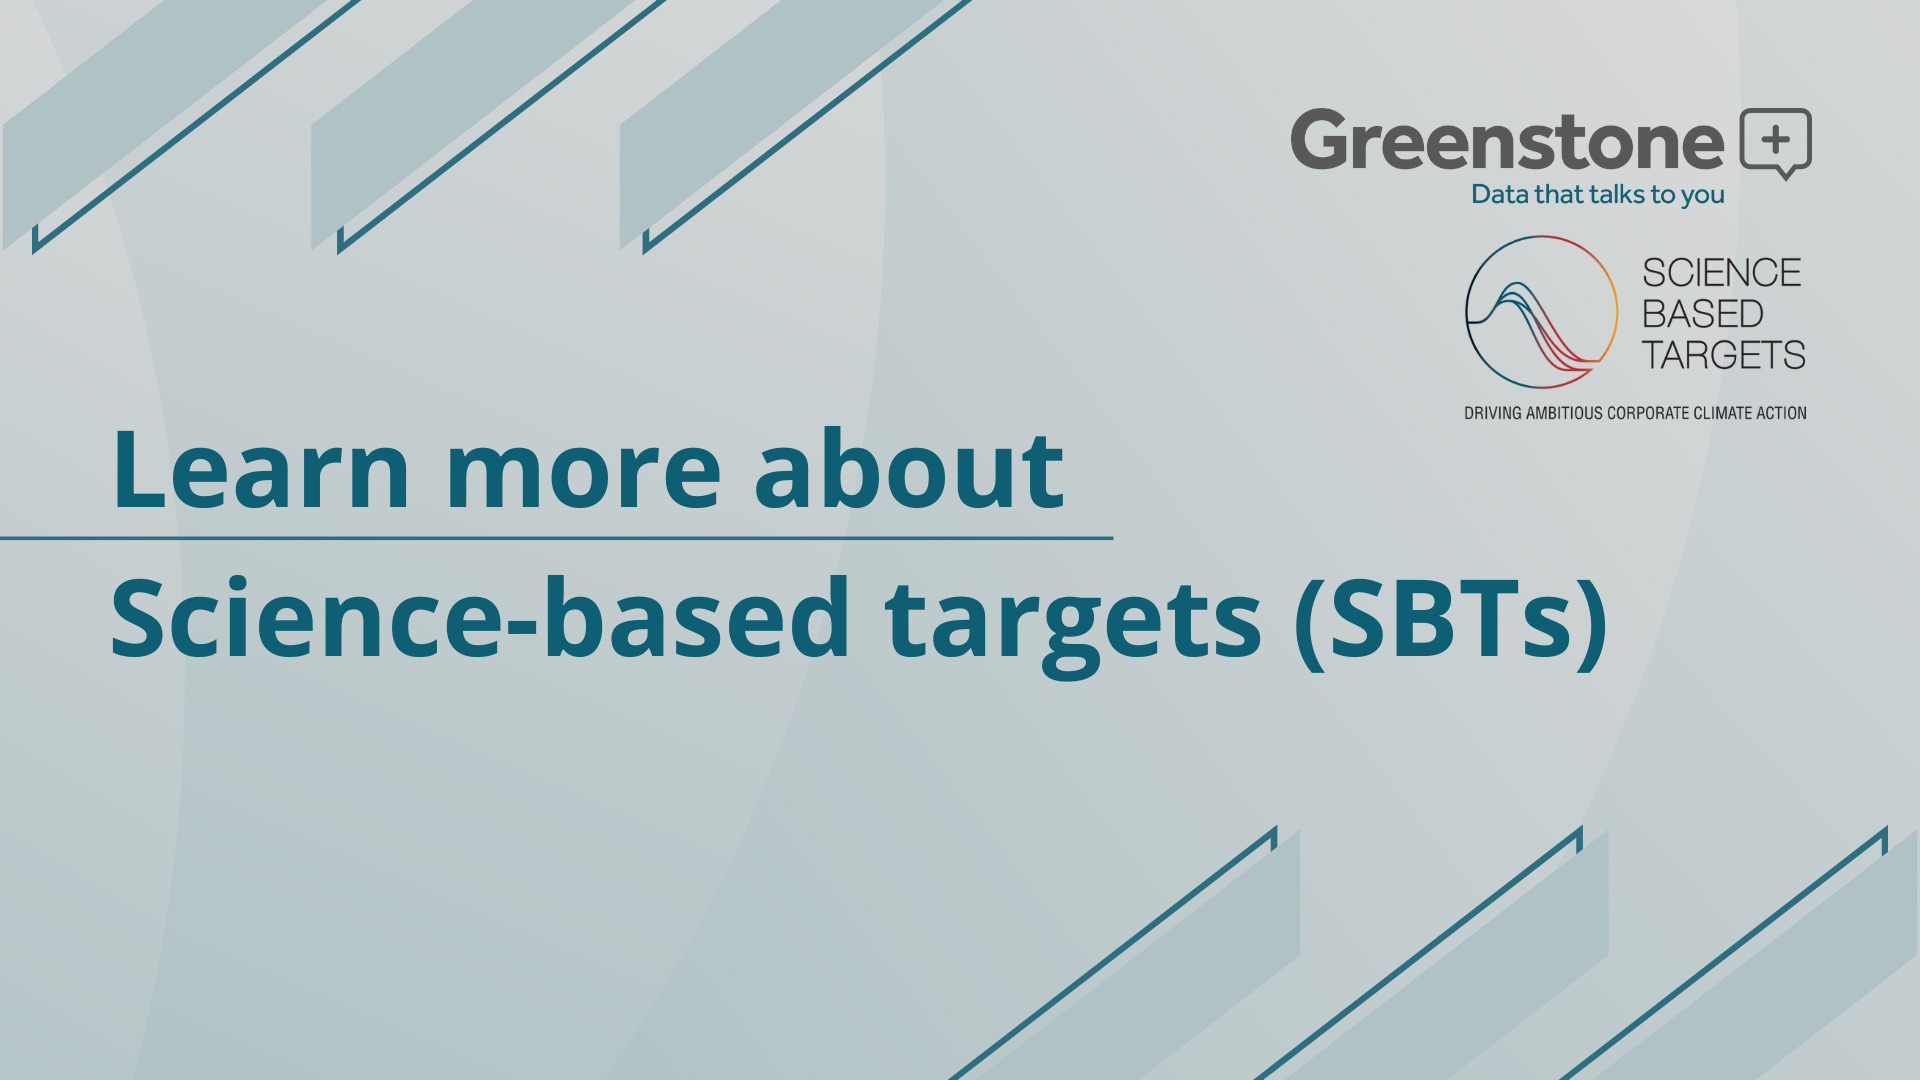 Greenstone & Science-based targets